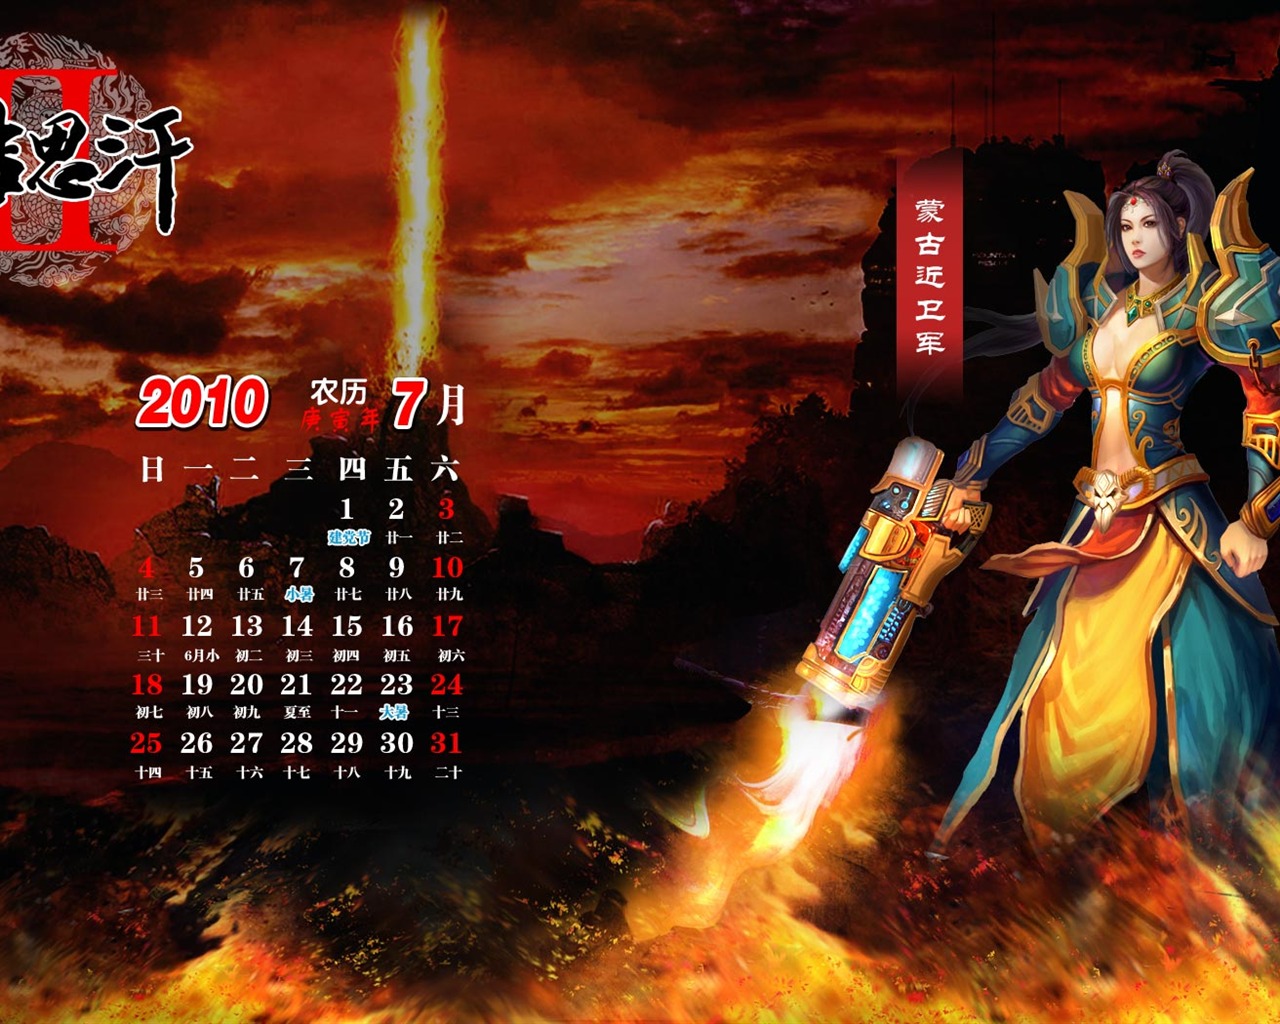 Fond d'écran Genghis Khan 2 jeu #9 - 1280x1024